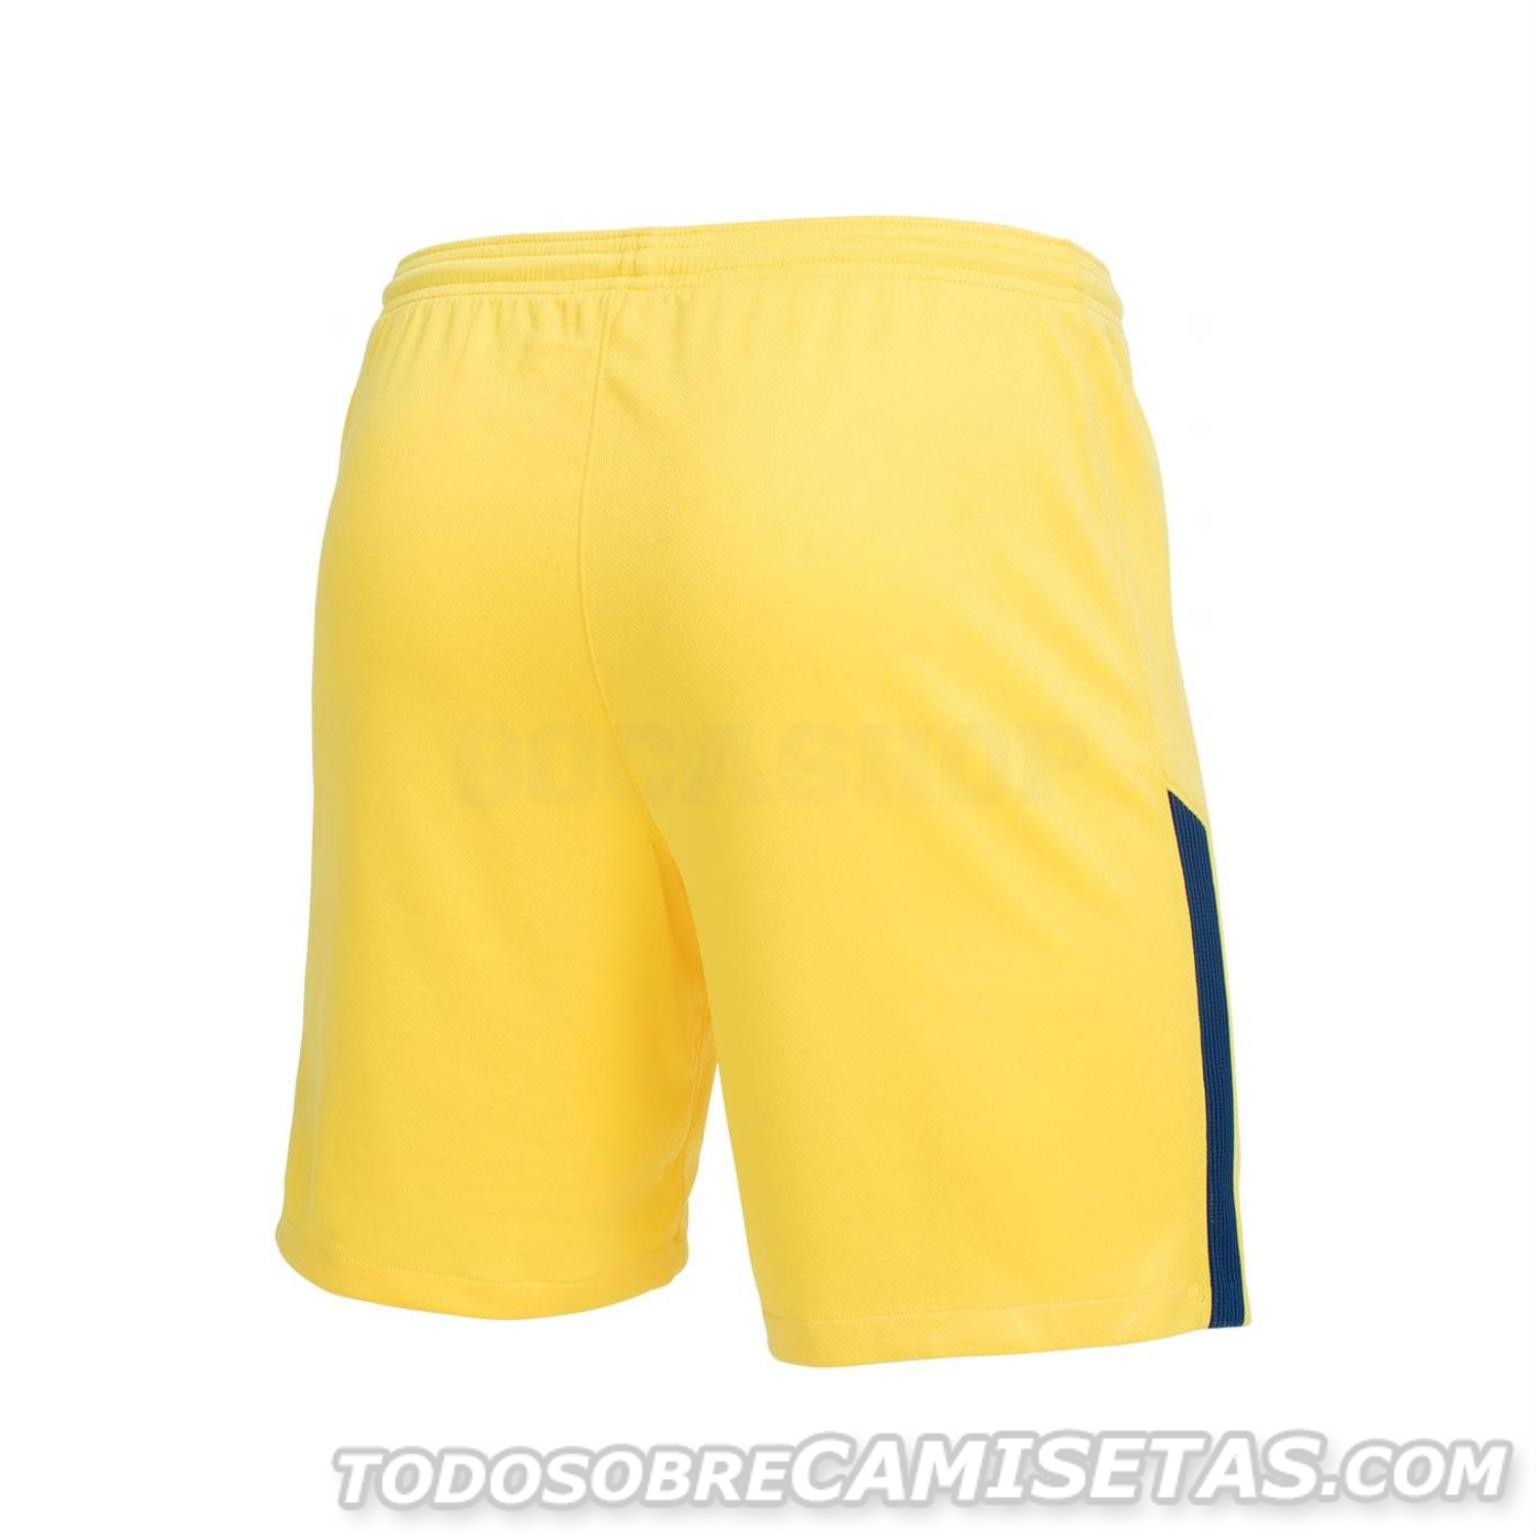 Camiseta Suplente Nike de Boca Juniors 2017